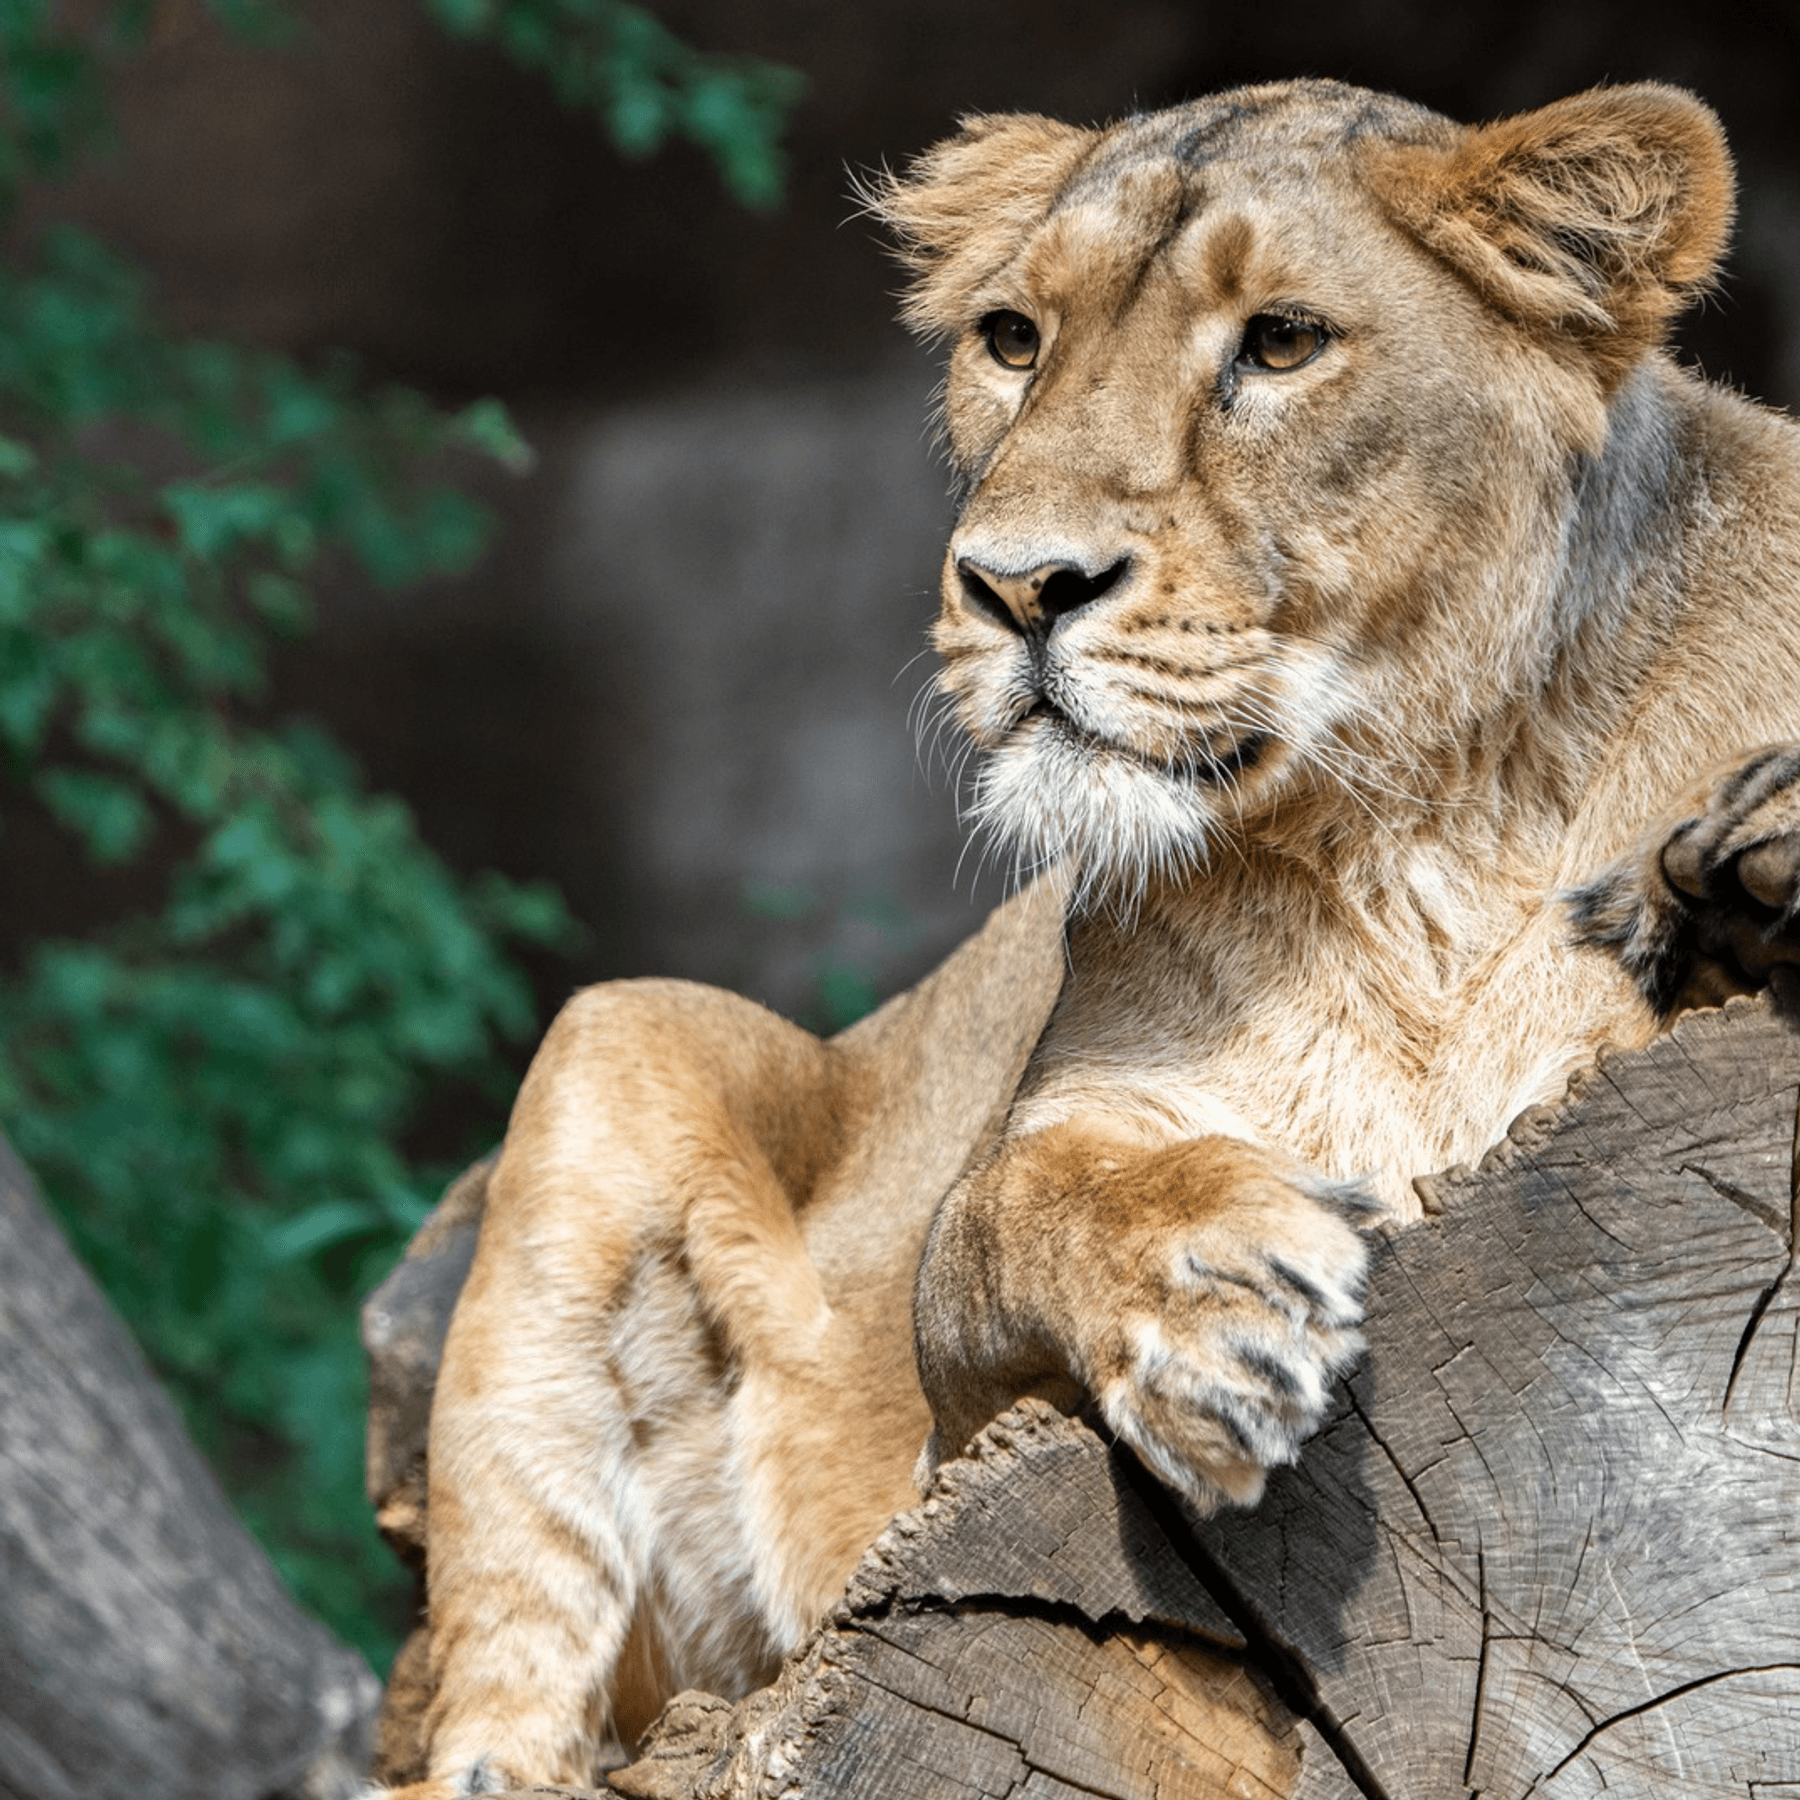 Tiergarten Nürnberg: Löwin Aarany frisst alle ihre Jungen auf